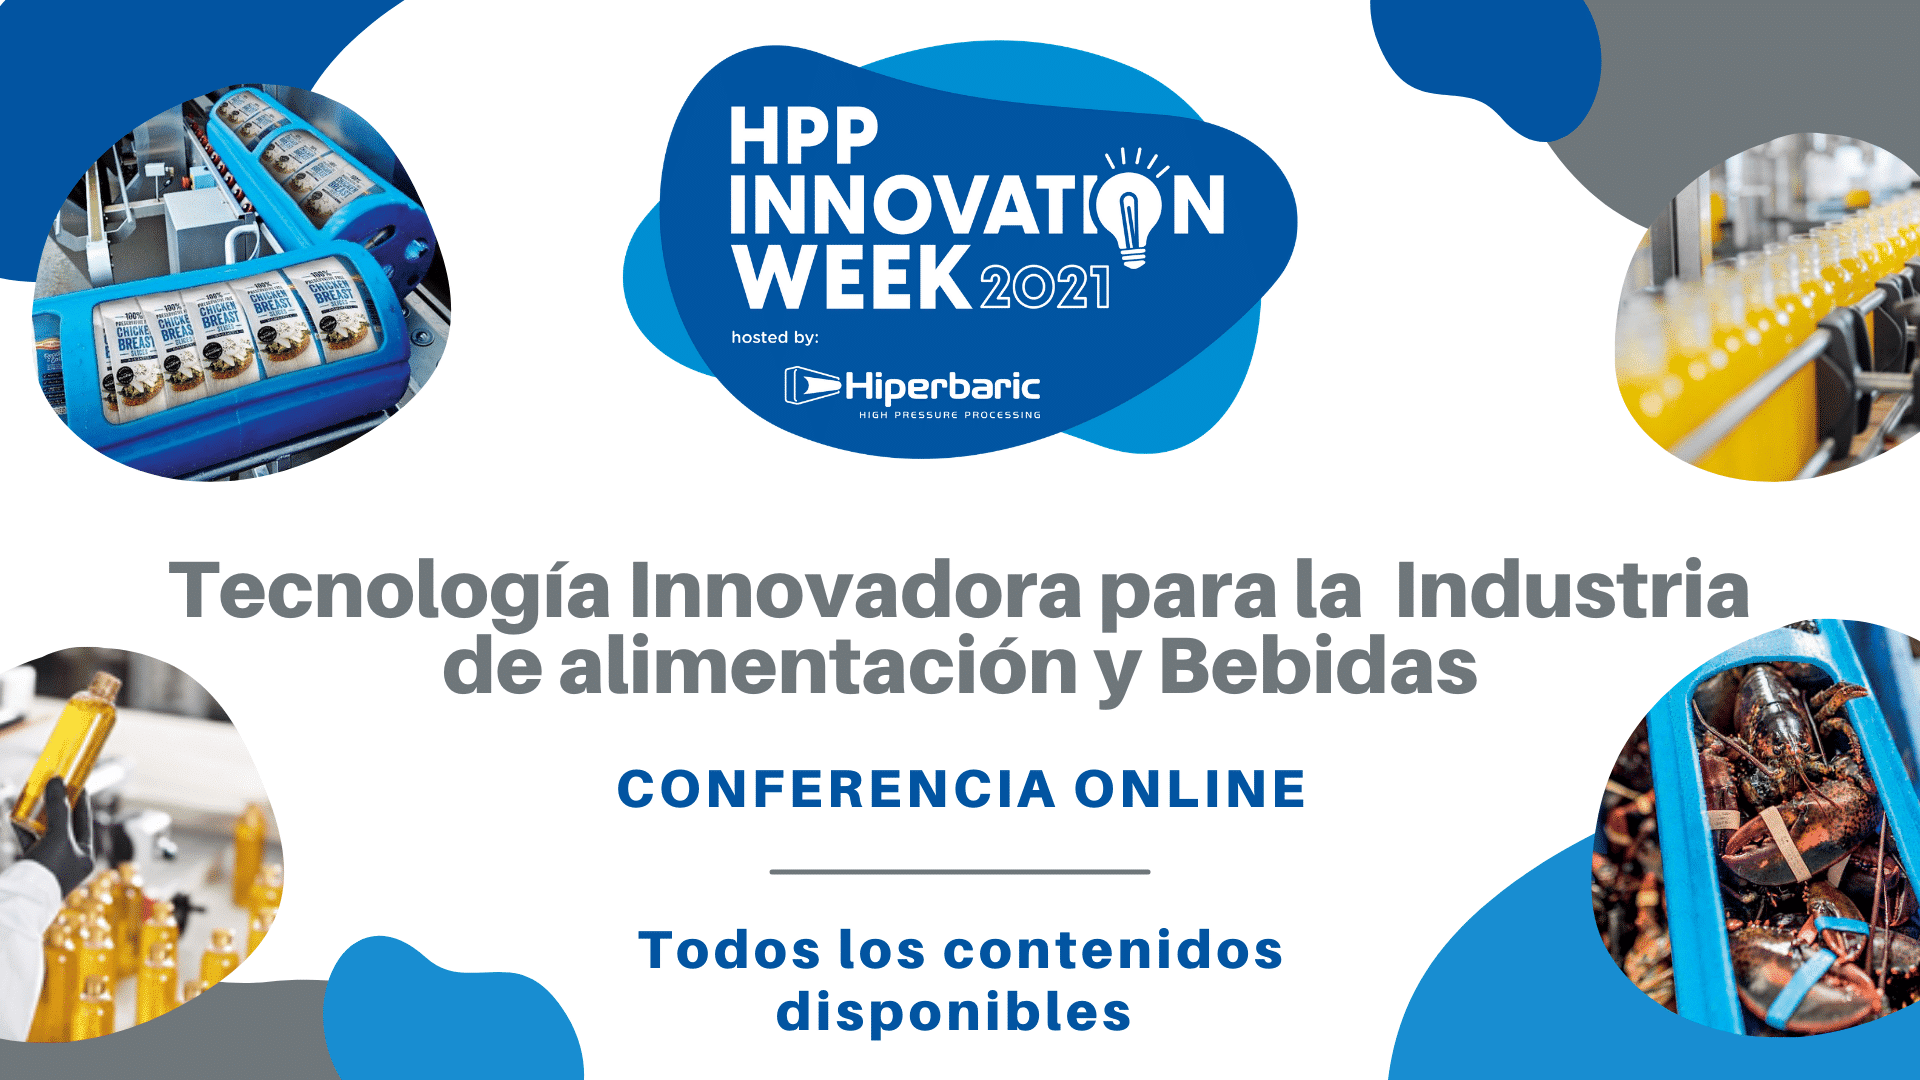 HPP Innovation Week 2021_contenidos disponibles